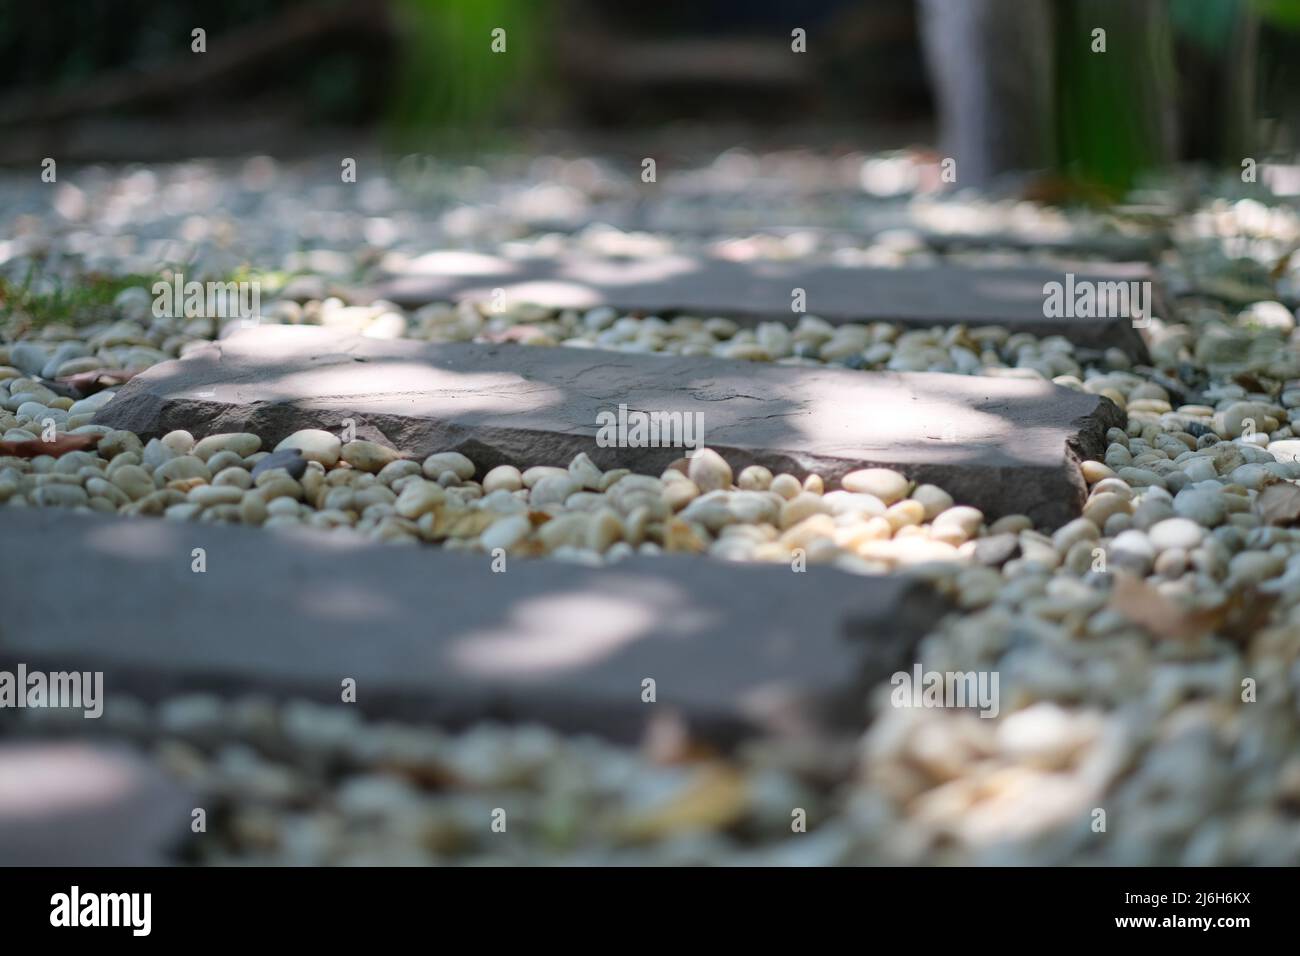 A walkway through garden made of neatly arranged stone tiles and a gravel Stock Photo